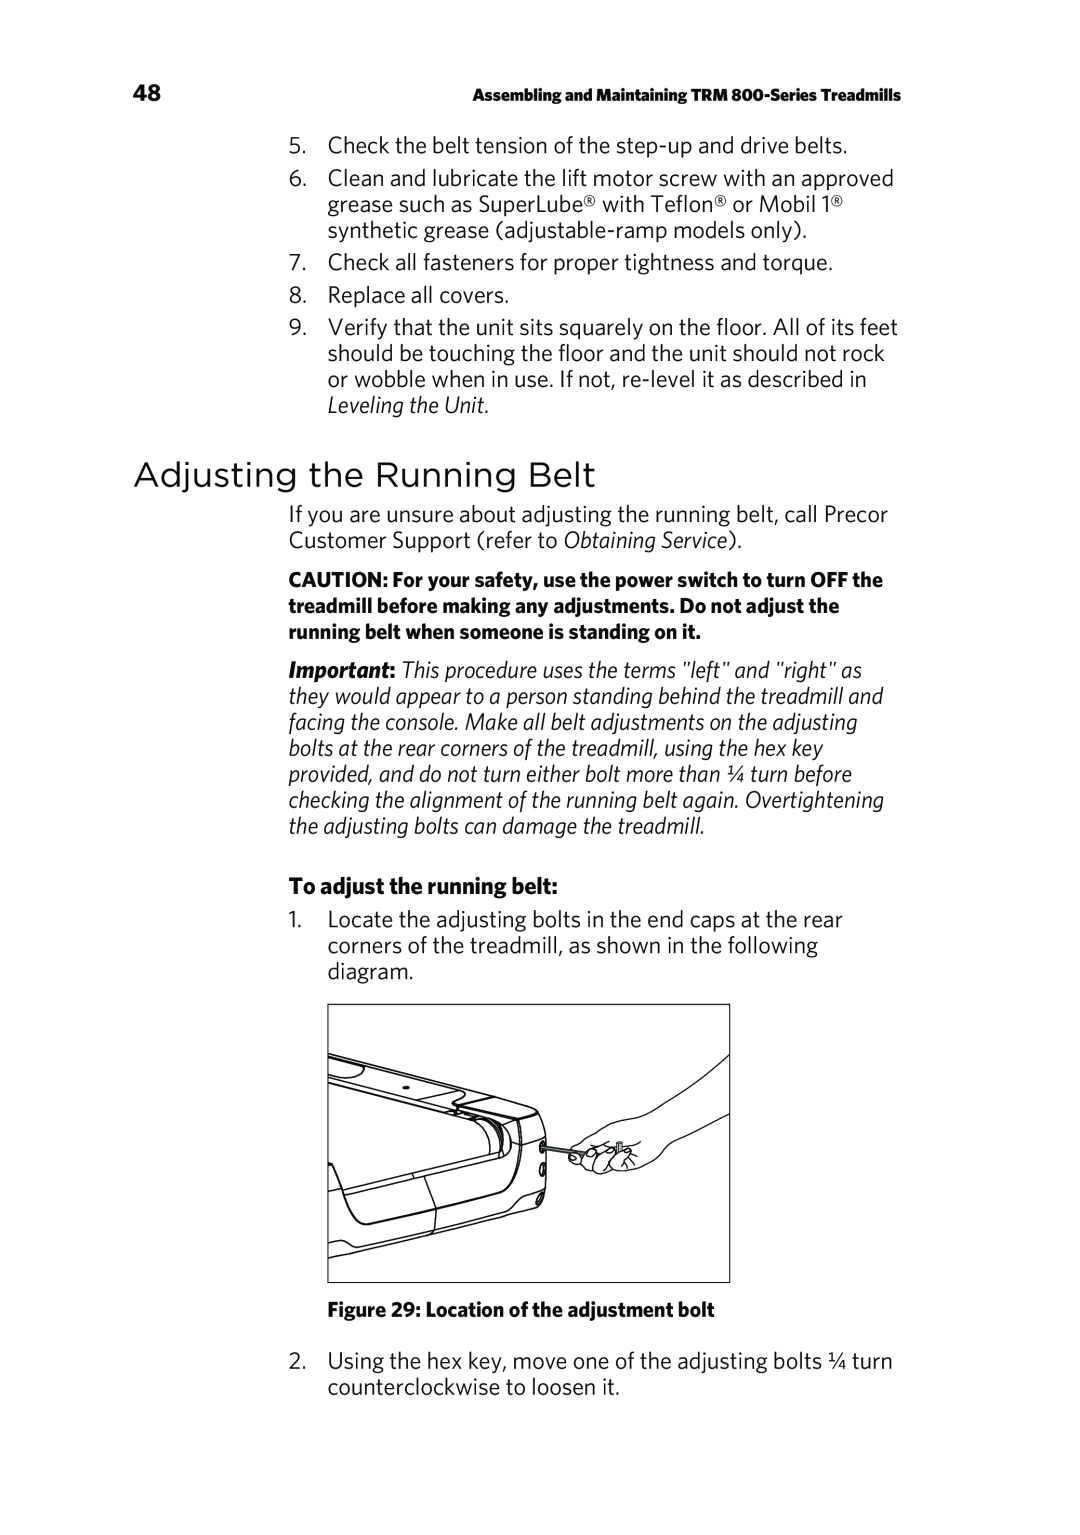 Precor P80 manual Adjusting the Running Belt, To adjust the running belt 